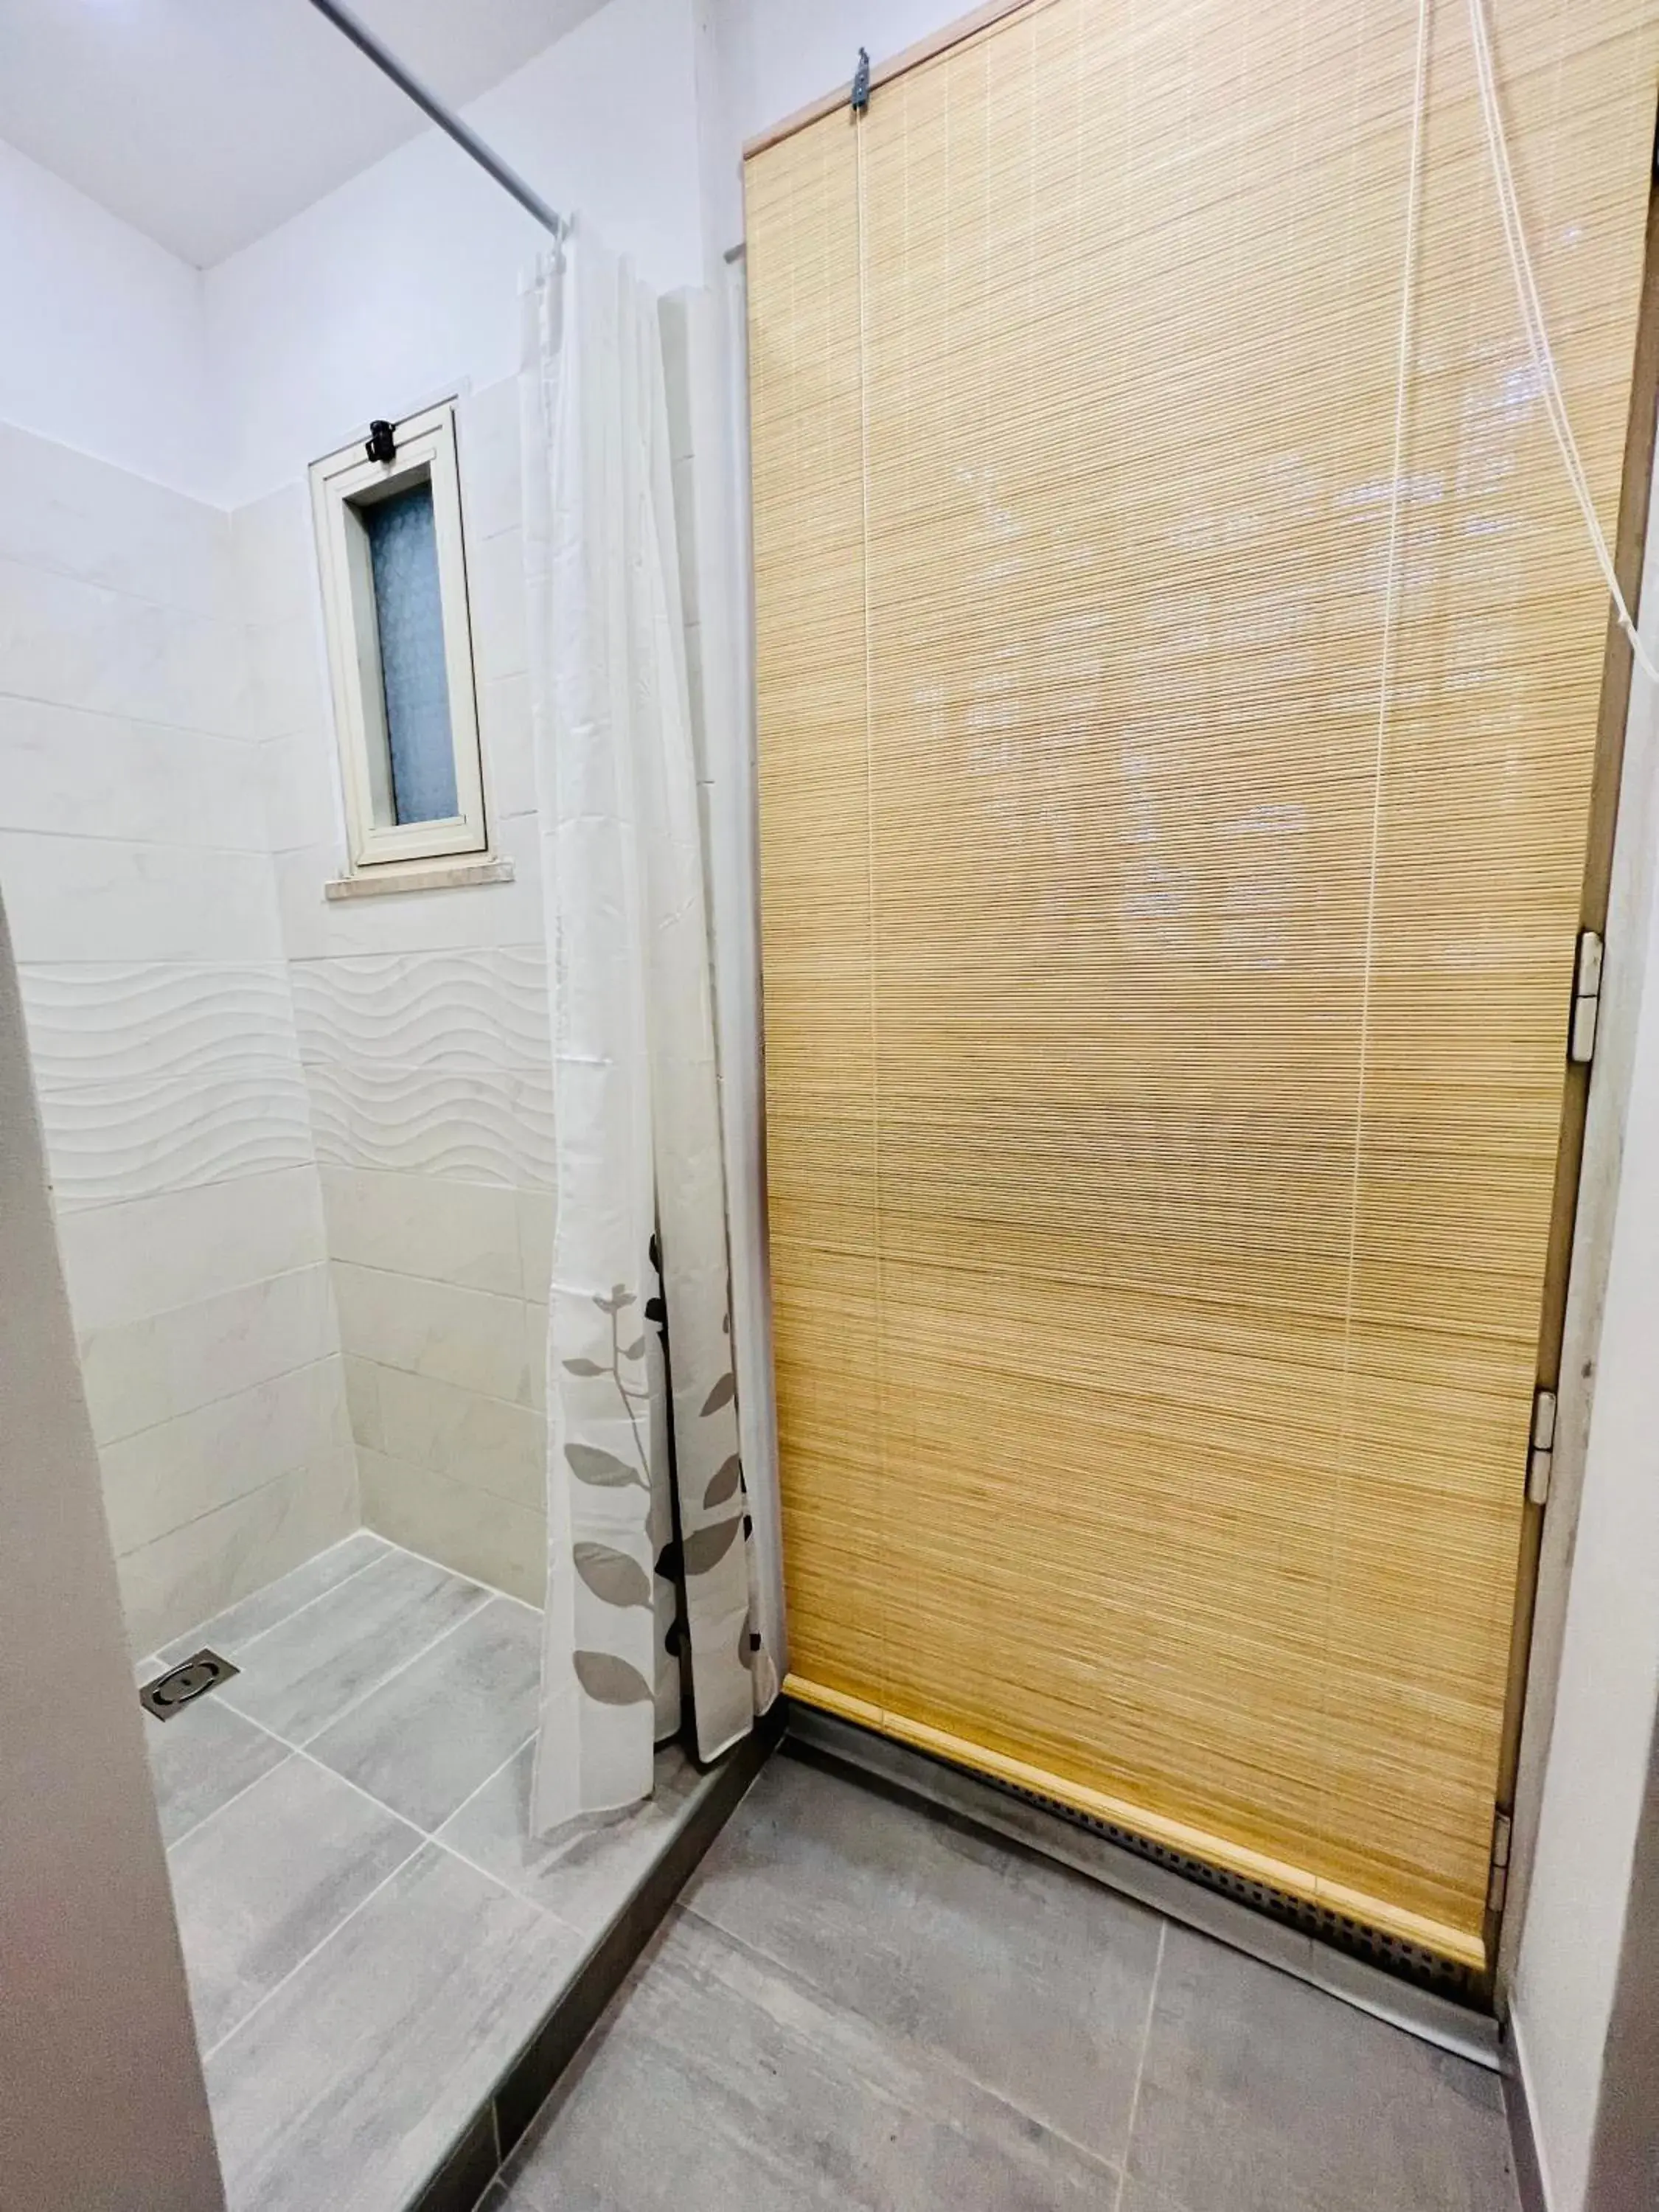 Bathroom in Hotel Pisa